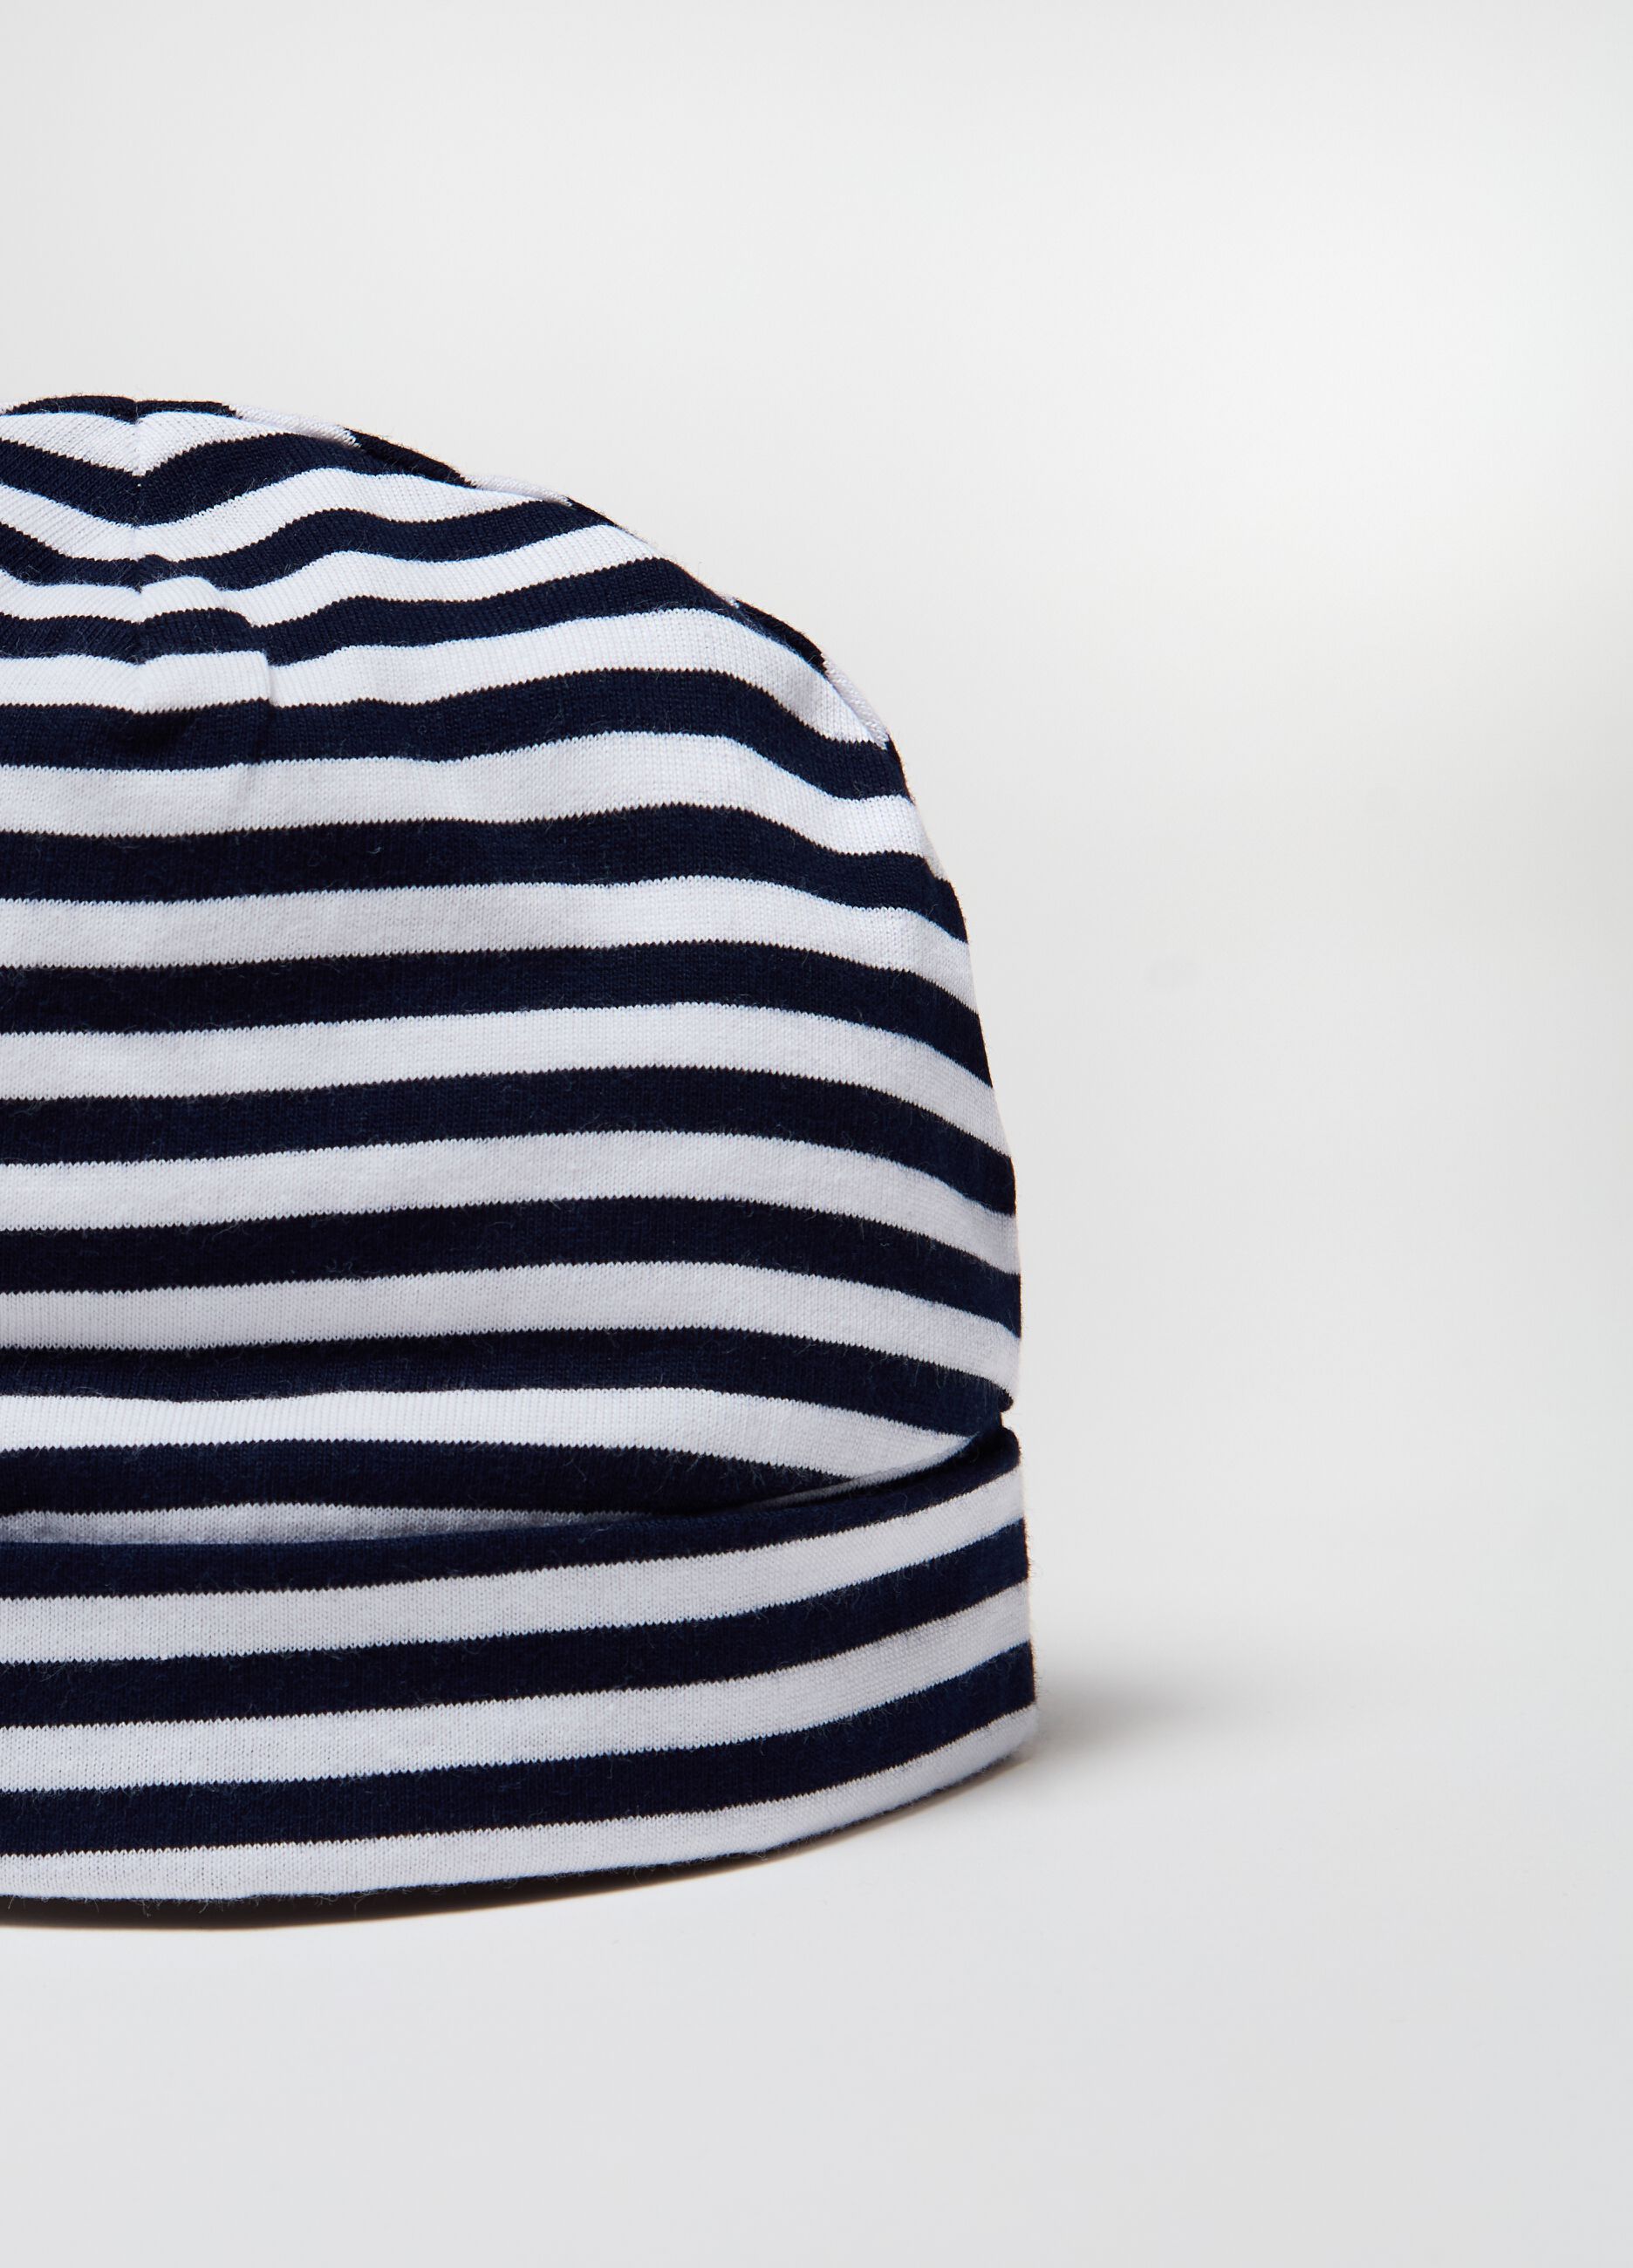 Striped organic cotton hat